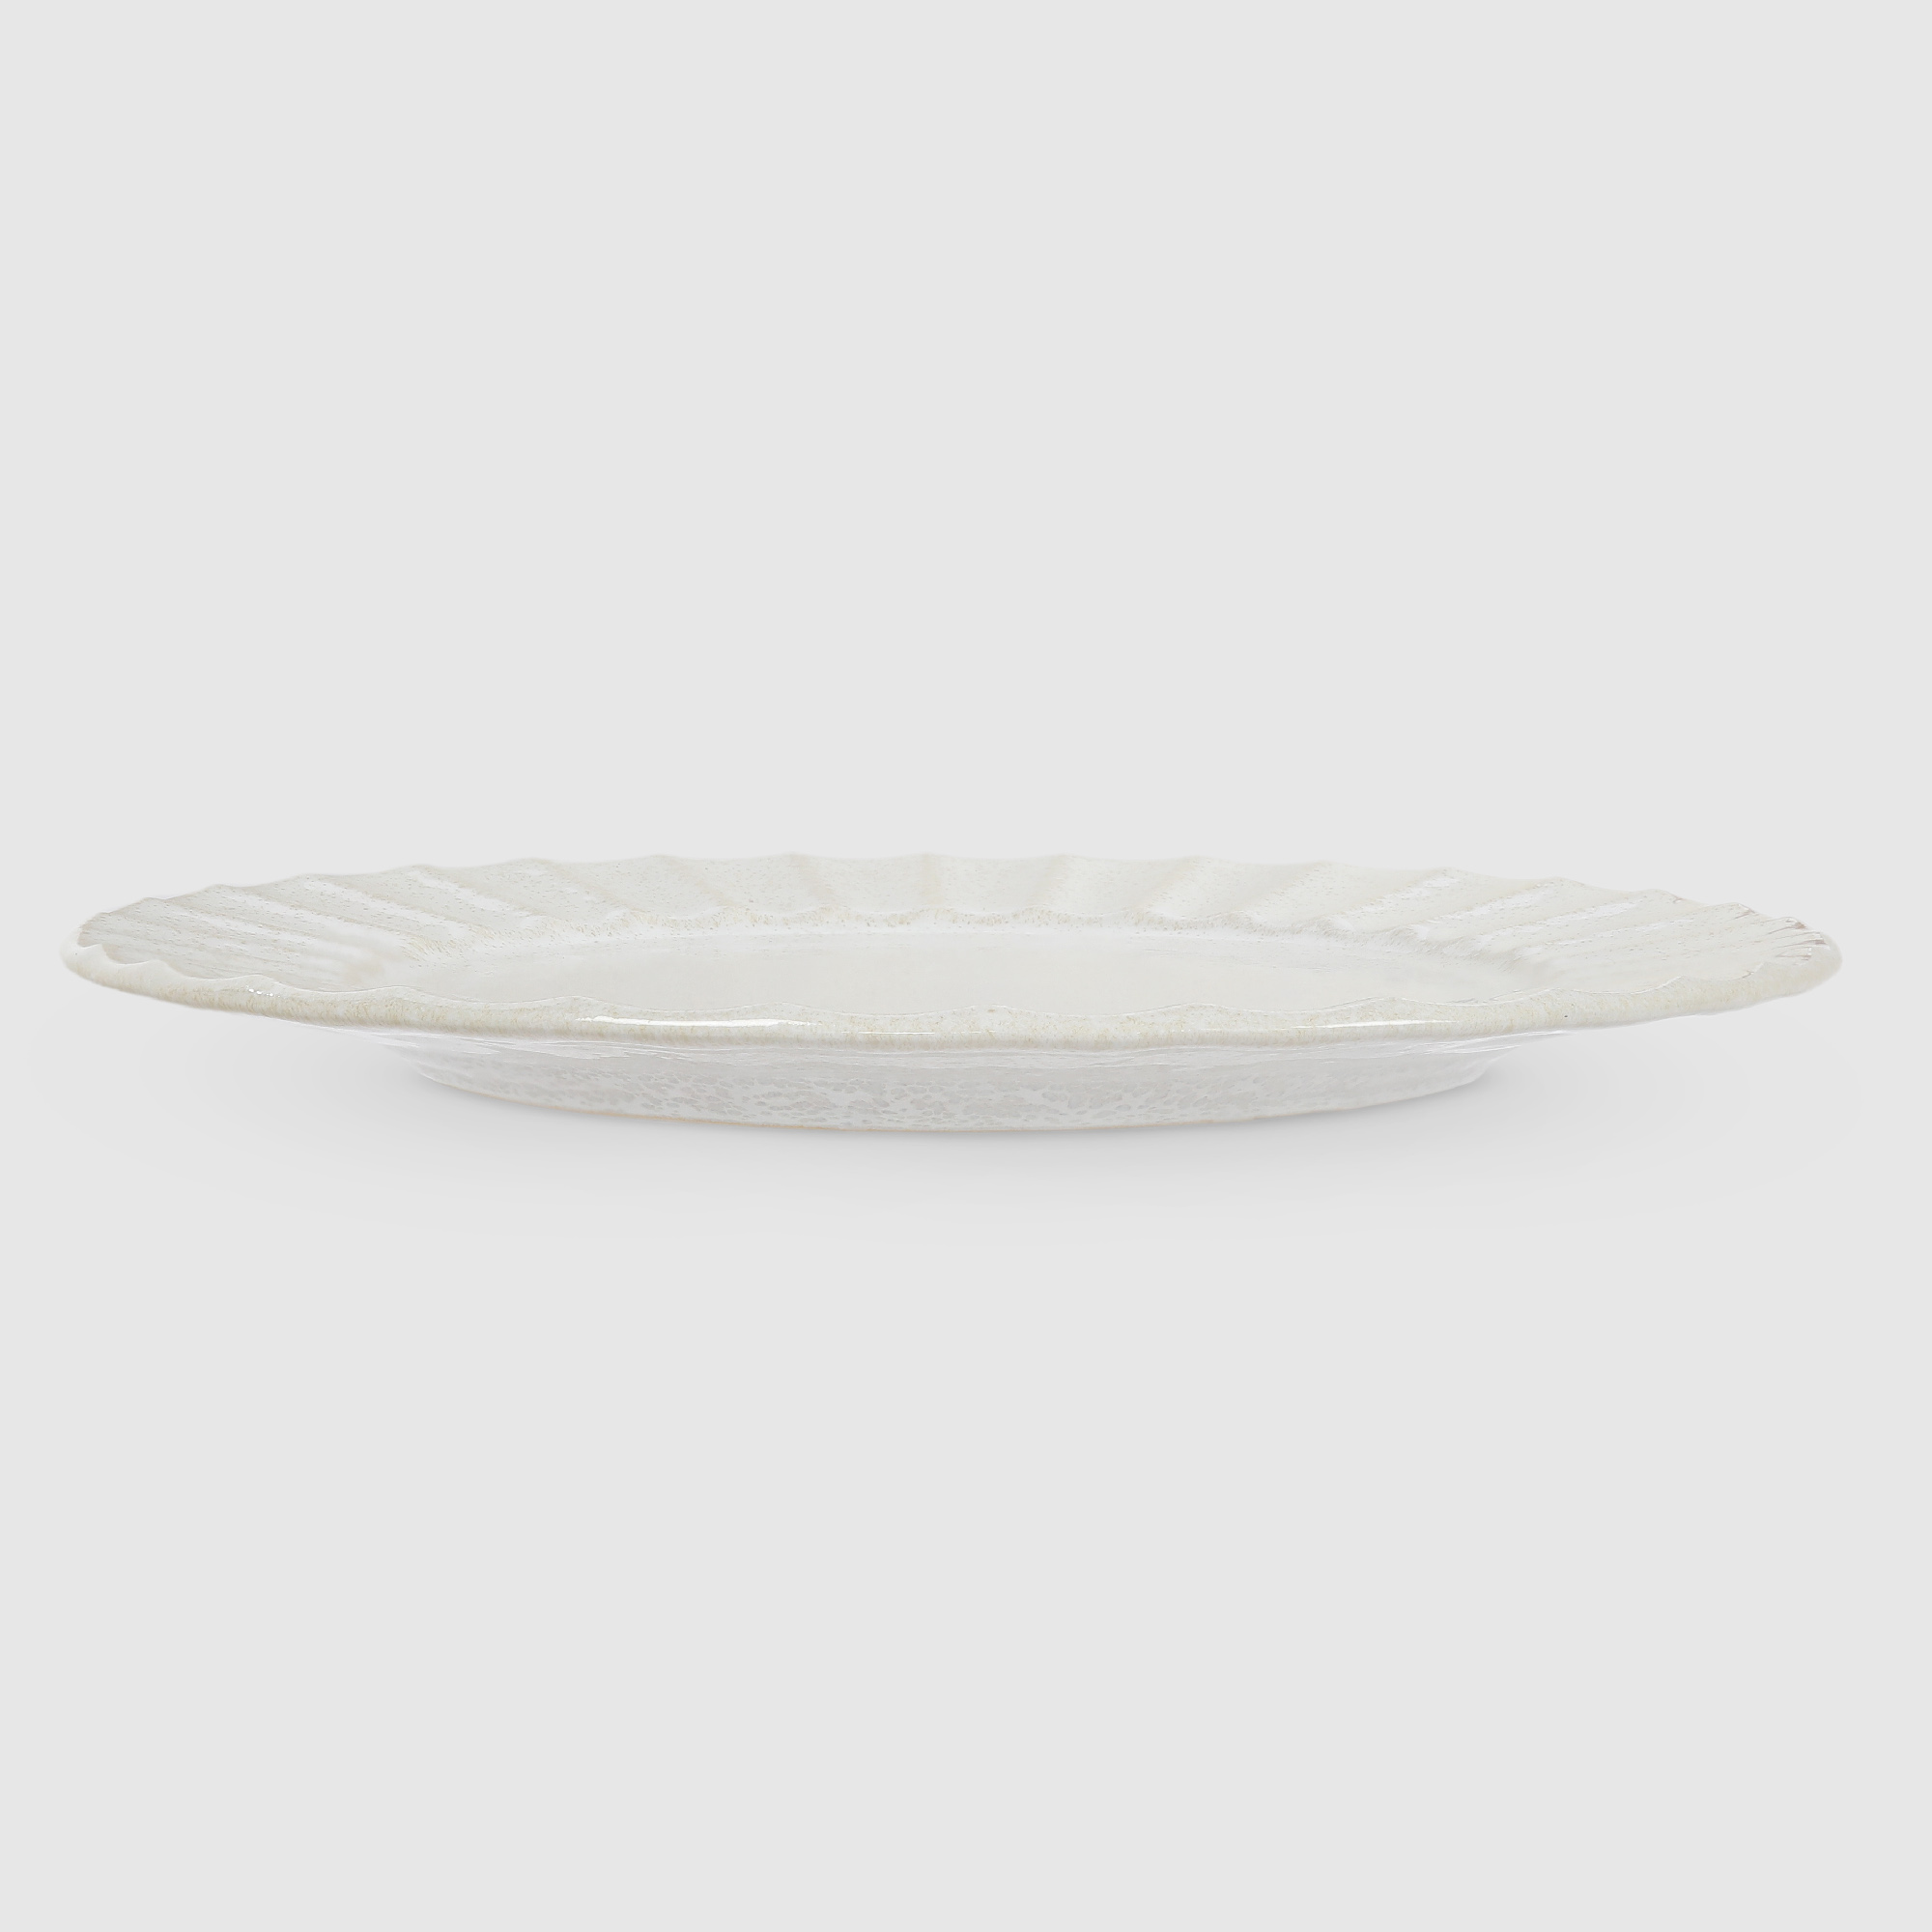 Тарелка Kutahya porselen Antropoloji 27 см тарелка суповая 22 см kutahya porselen irem недекорированная